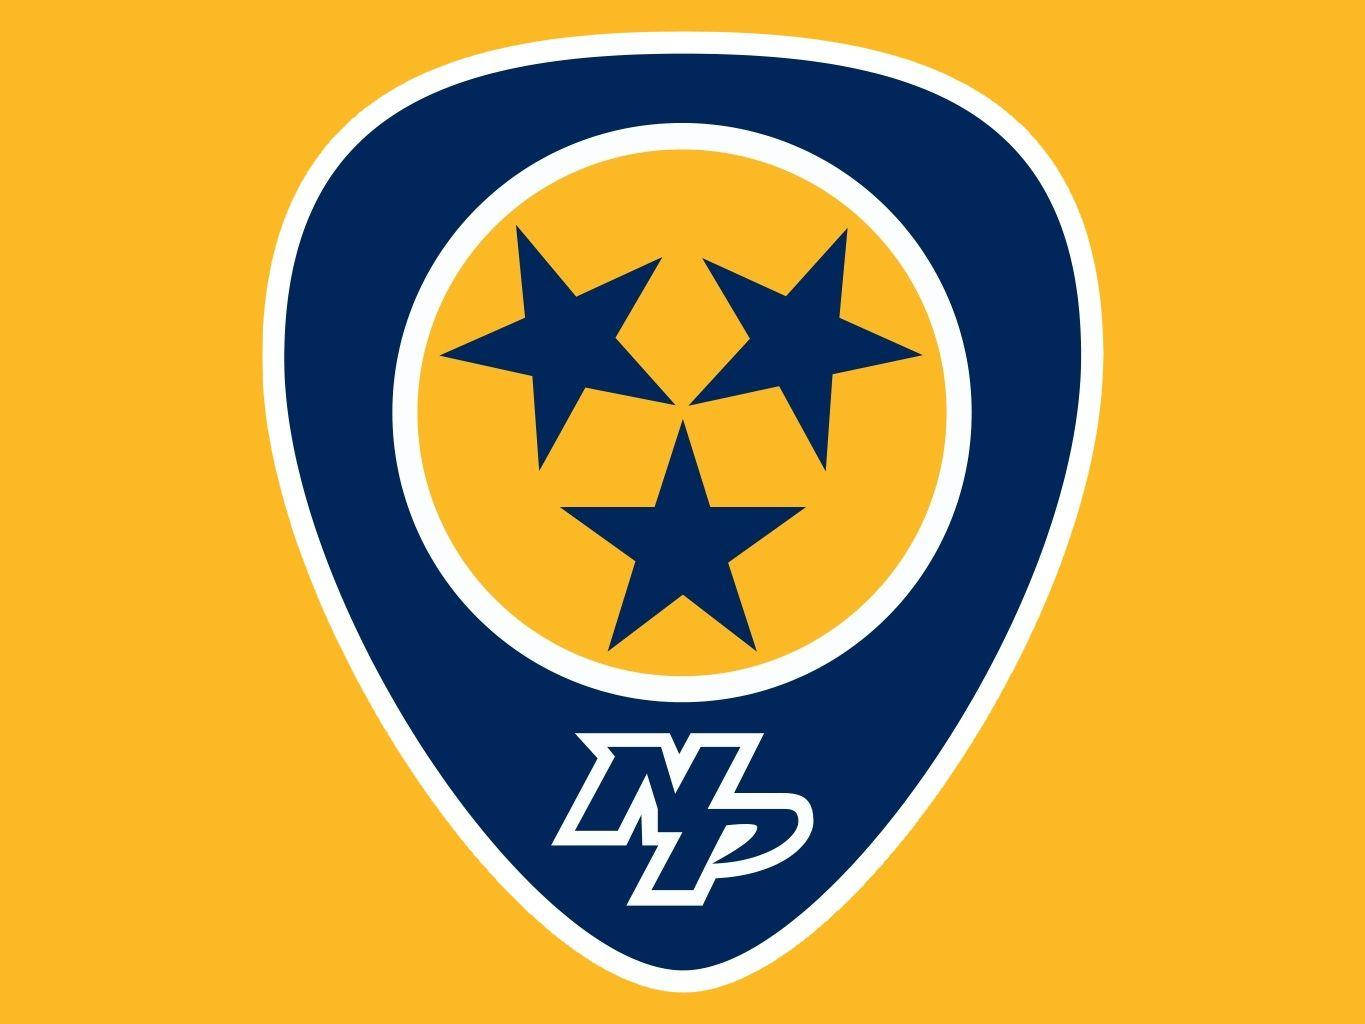 Nashville Predators' Logo Depicted In The Golden Ball And Stars. Wallpaper